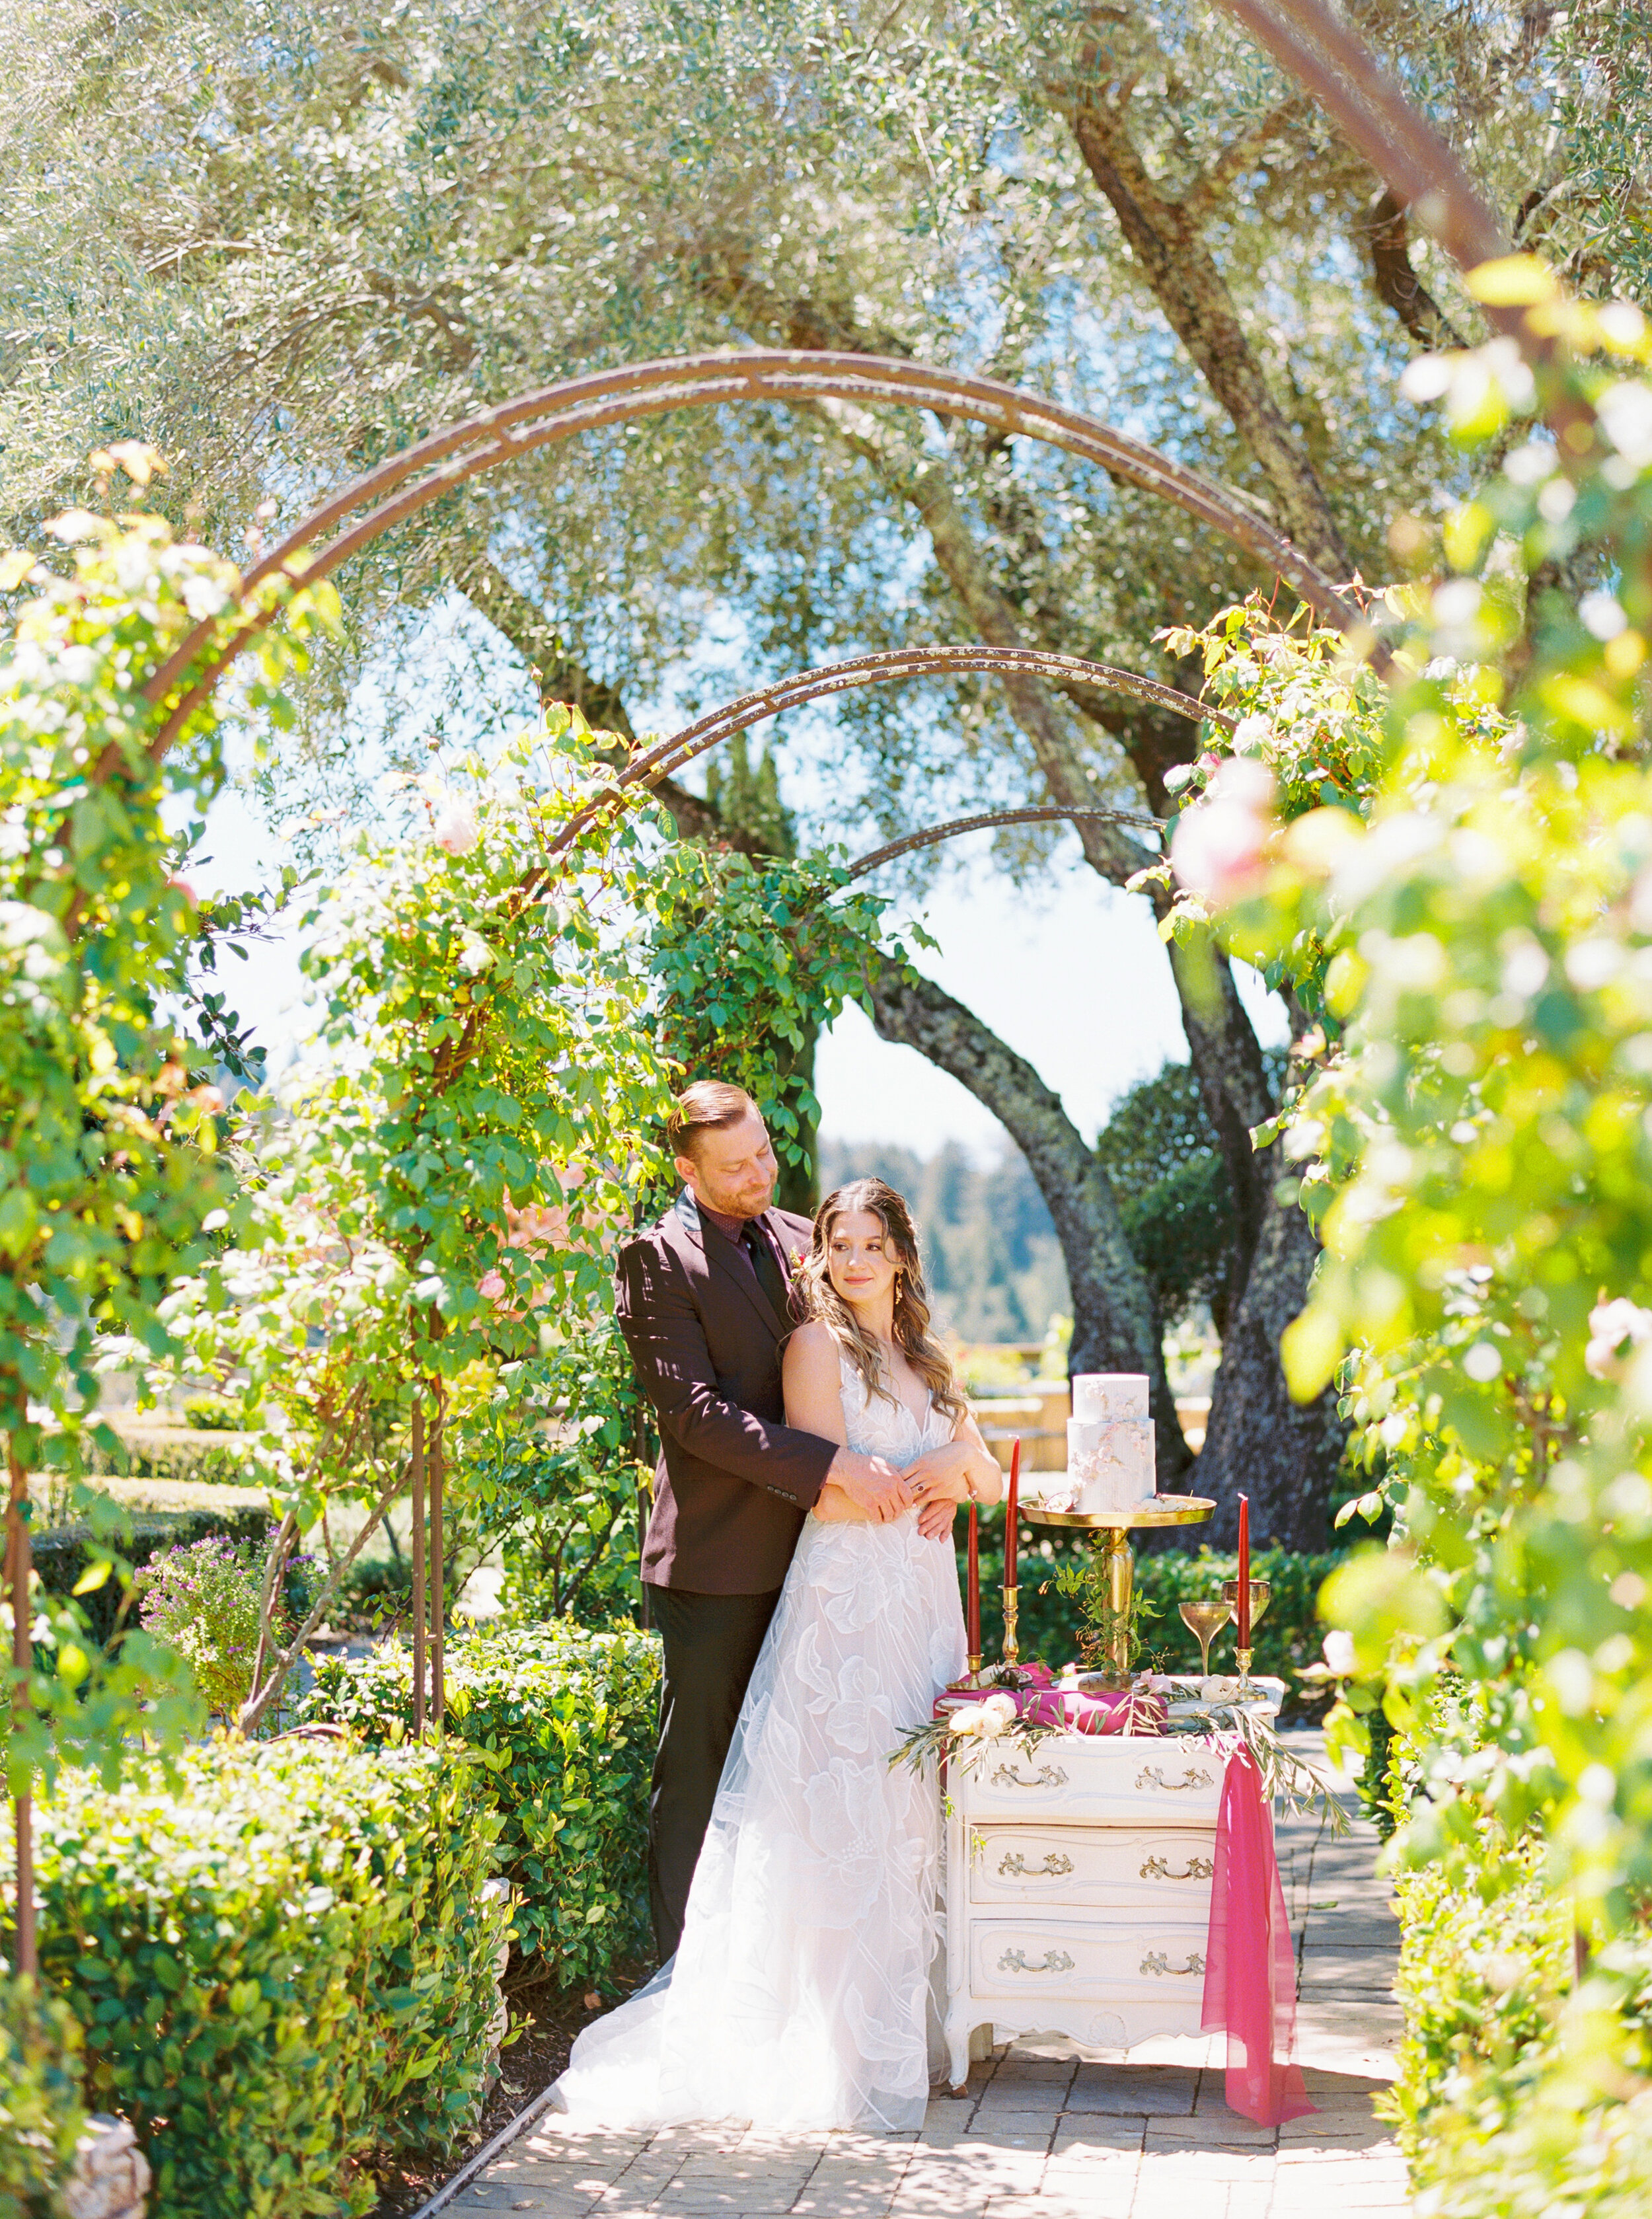 Regale Winery and Vineyards Wedding - Sarahi Hadden Photography-407.jpg